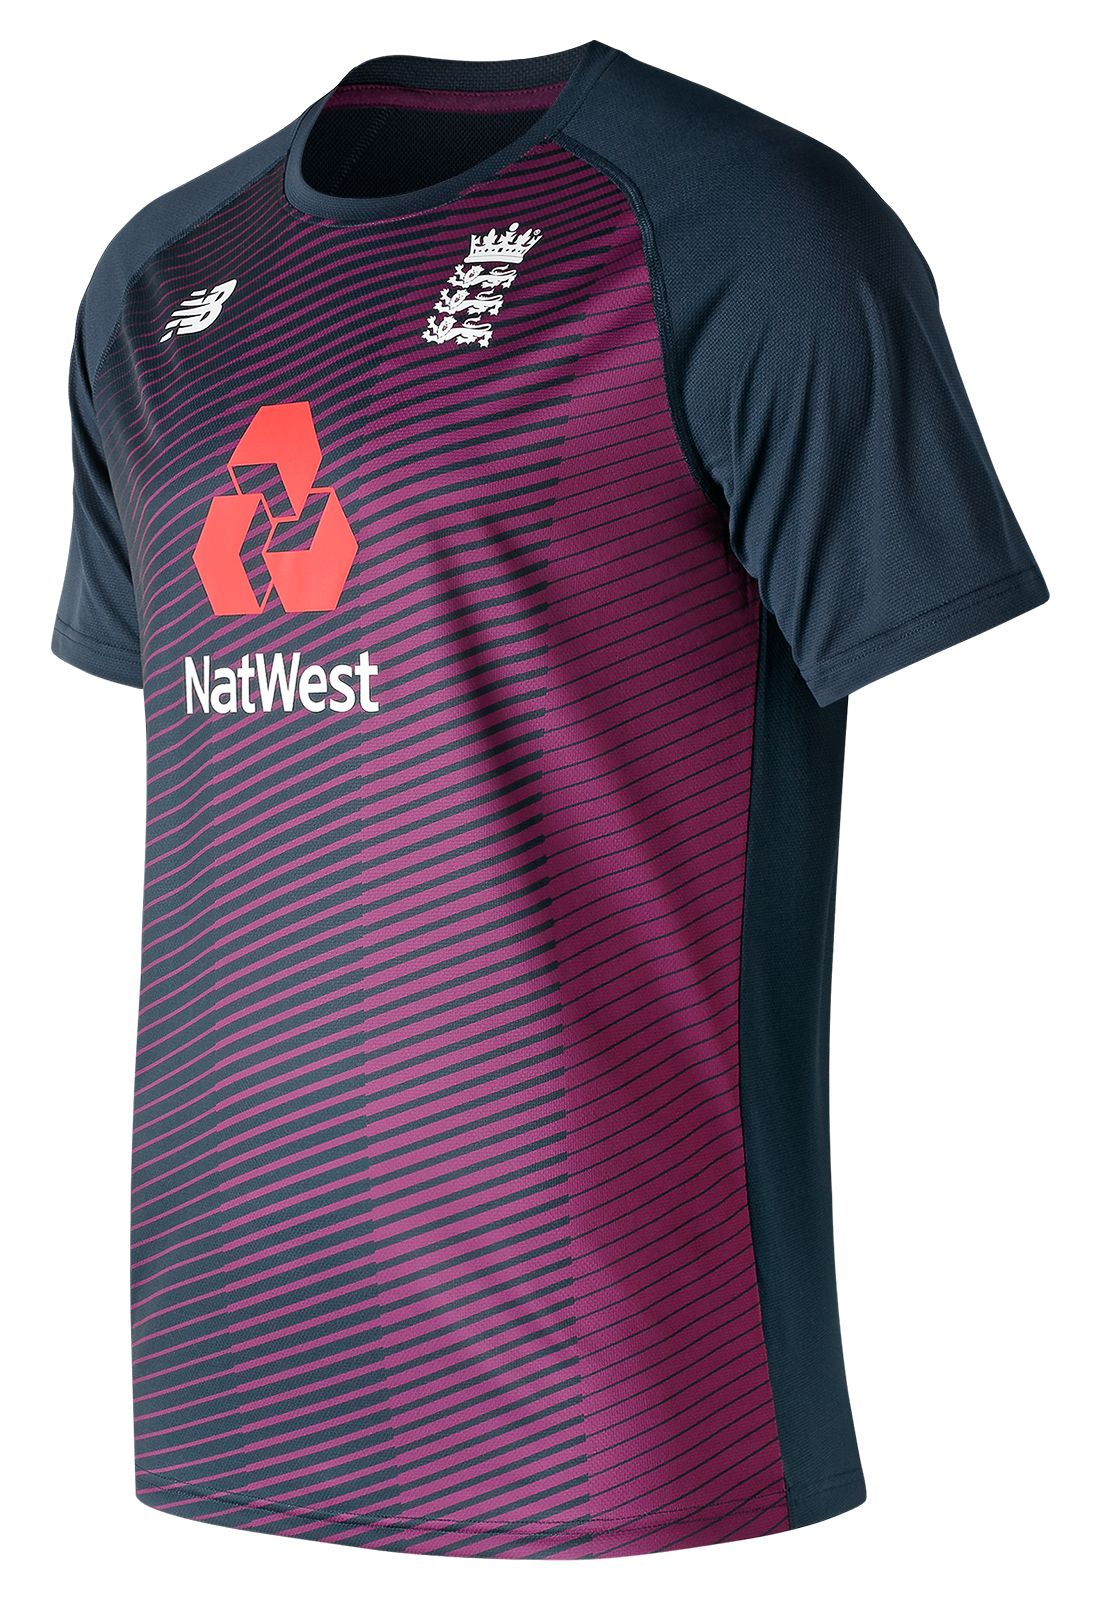 england cricket team merchandise